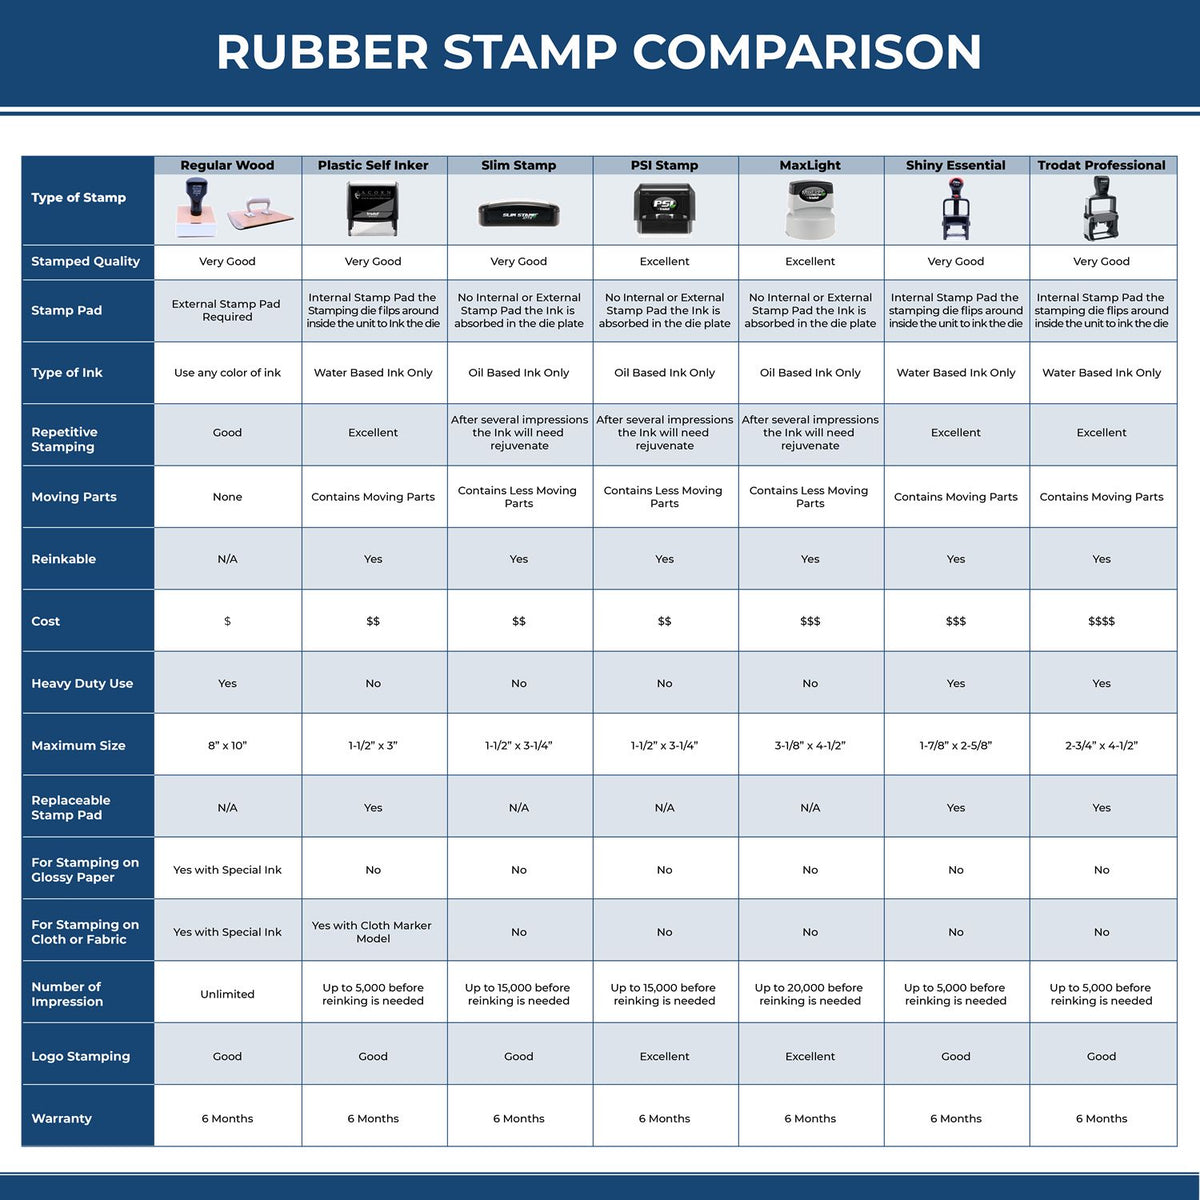 Large Pre-Inked Surface Stamp 5563SLIM Rubber Stamp Comparison